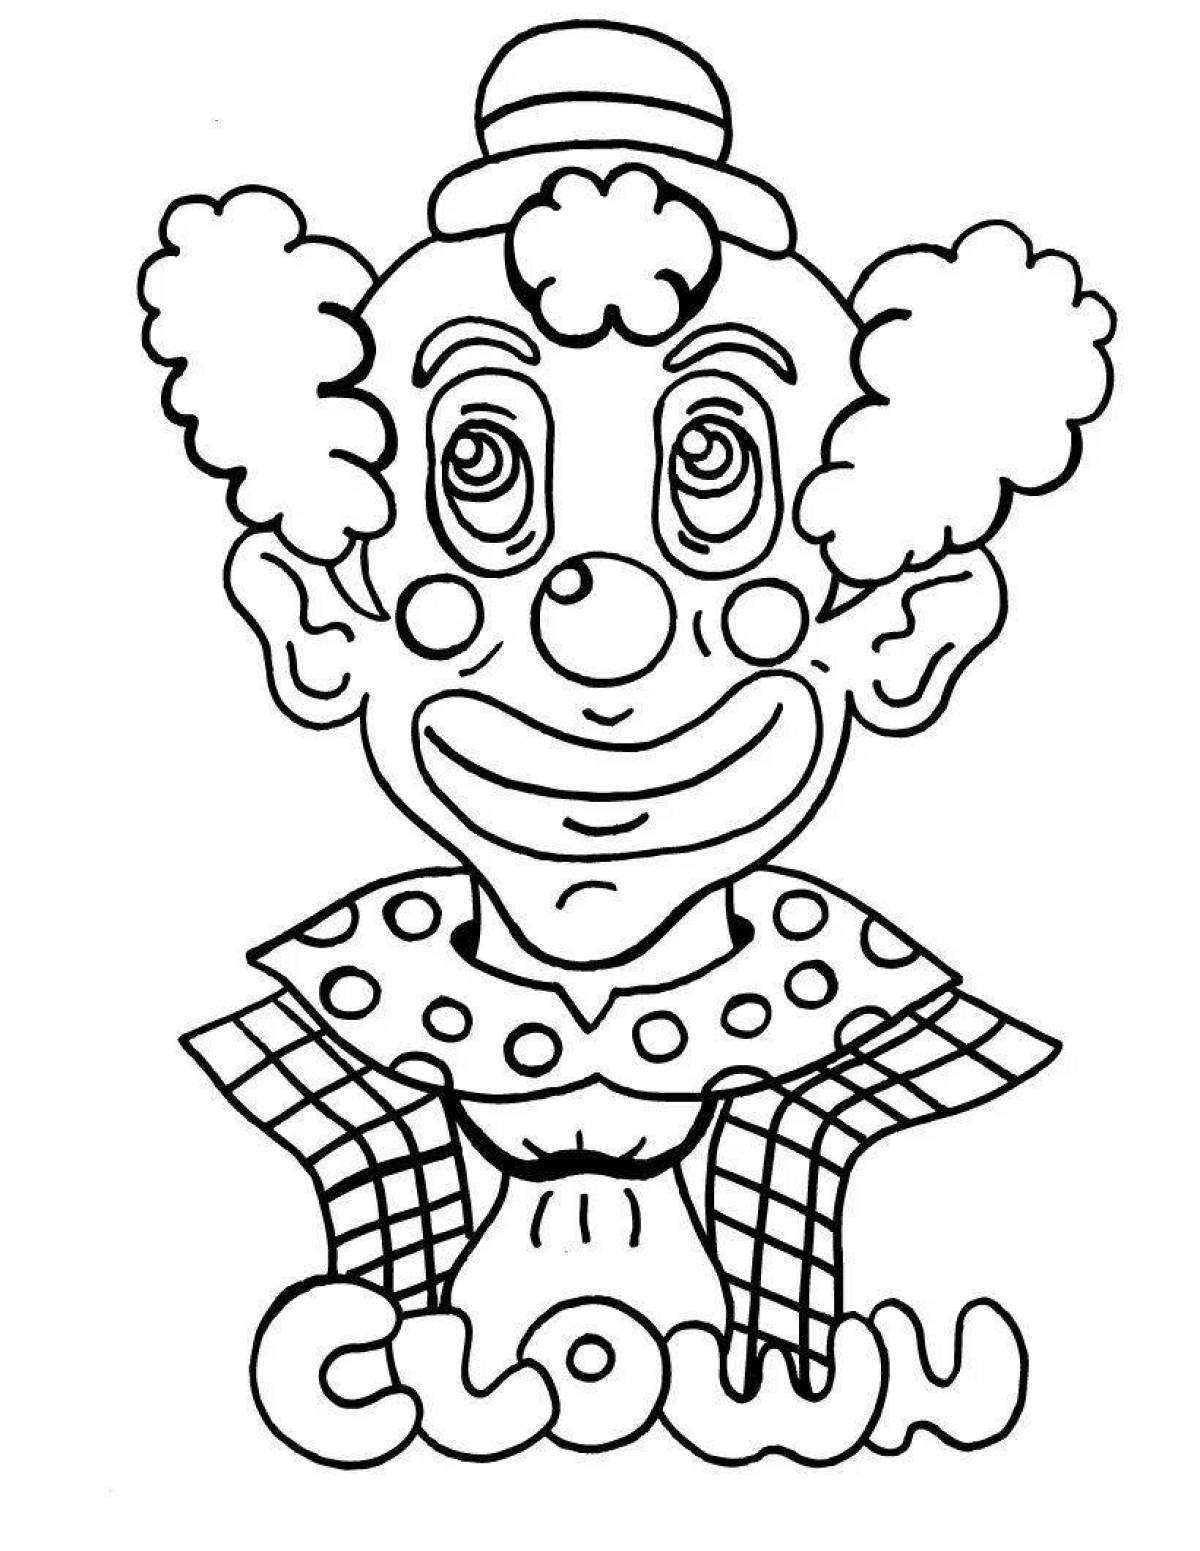 Клоун раскраска для детей 4 5. Клоун раскраска. Раскраска весёлый клоун для детей. Клоун раскраска для детей. Клоун для раскрашивания детям.